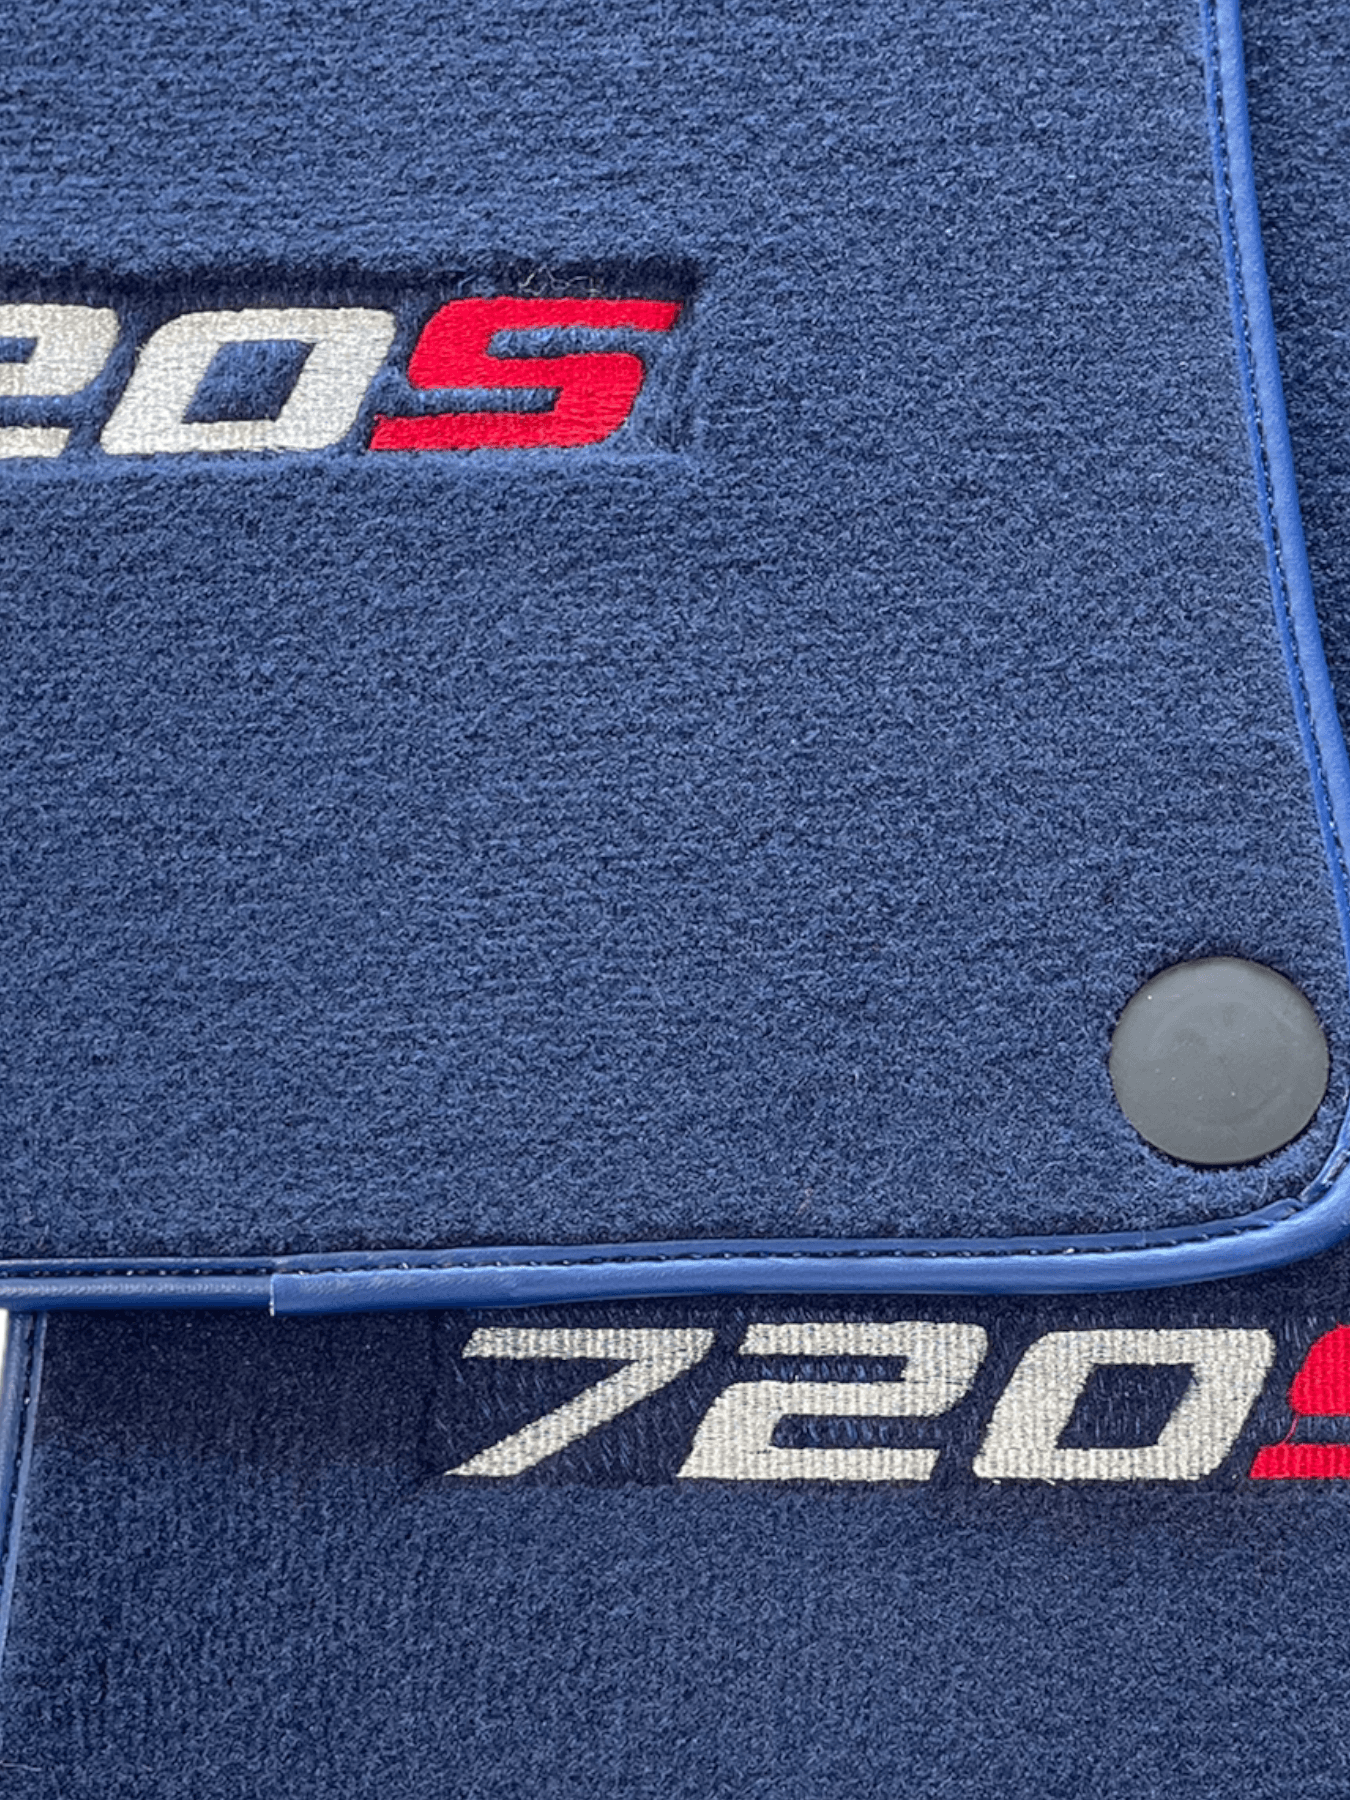 Floor Mats For McLaren 720S Dark Blue Tailored Carpets Set AutoWin - AutoWin